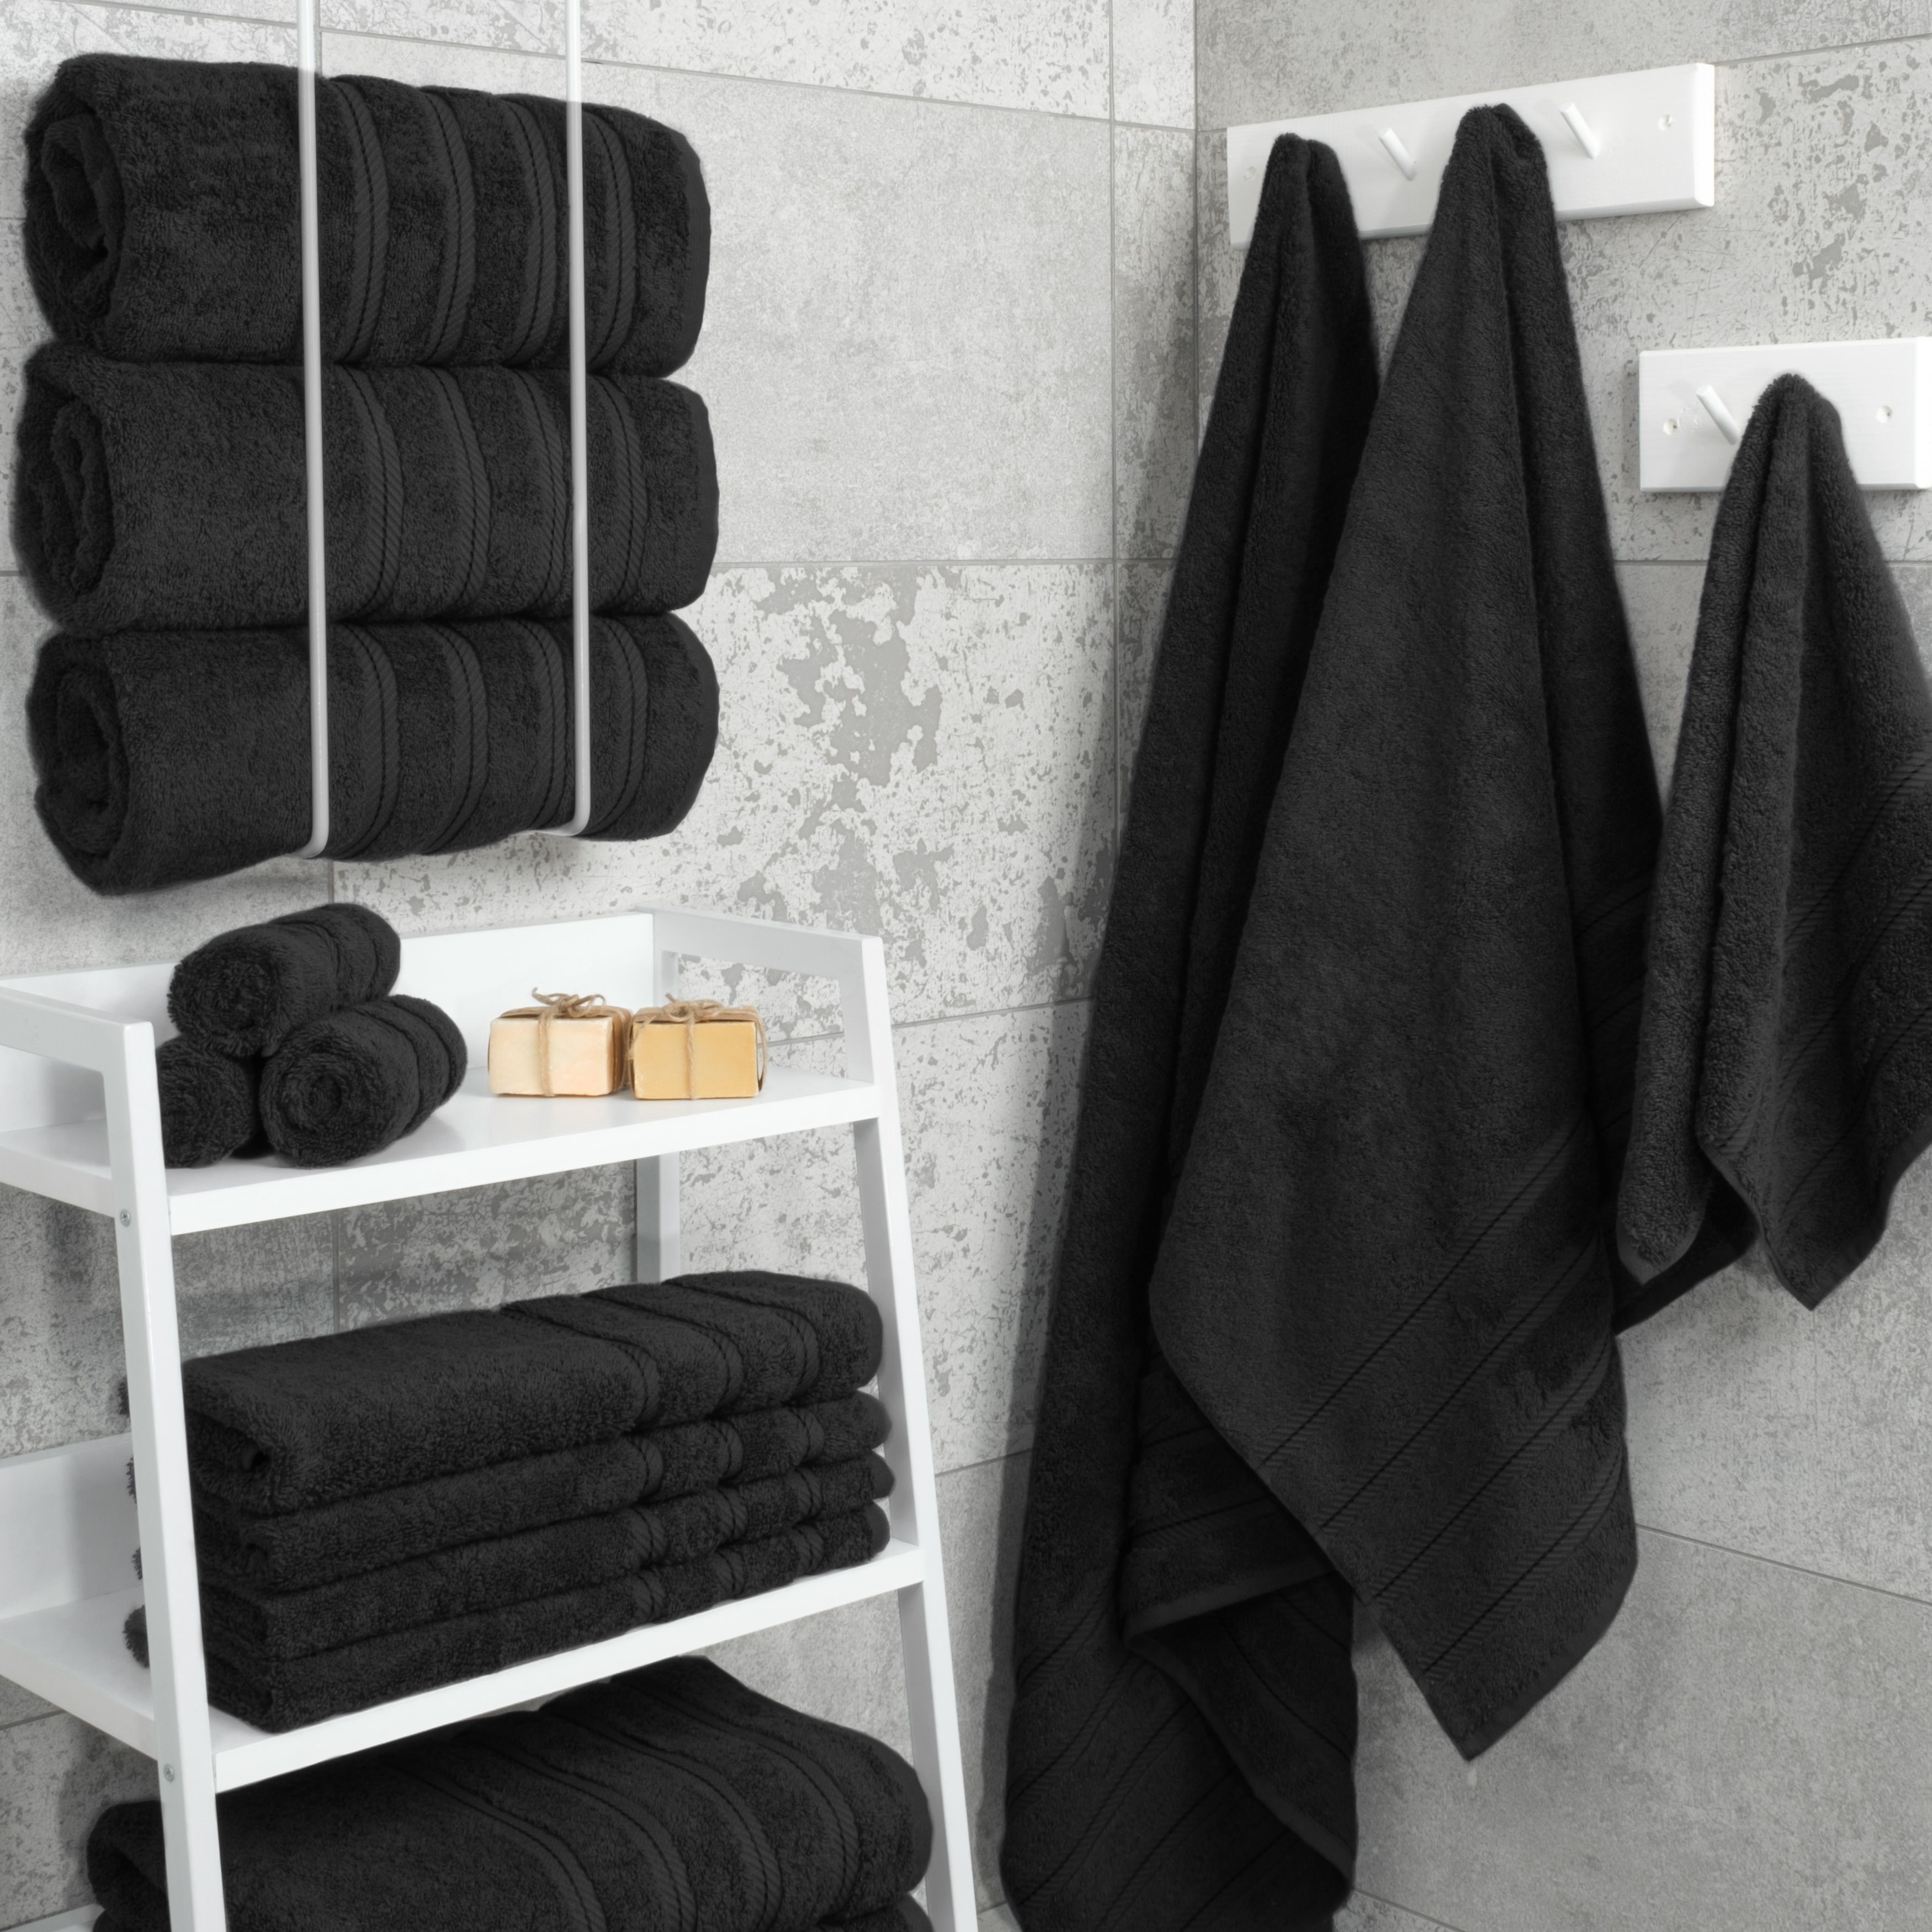 https://ak1.ostkcdn.com/images/products/is/images/direct/7e5ef5eed9a3137bdb7facb6d6dbc34a59b27e36/American-Soft-Linen-Turkish-Cotton-4-Piece-Bath-Towel-Set.jpg